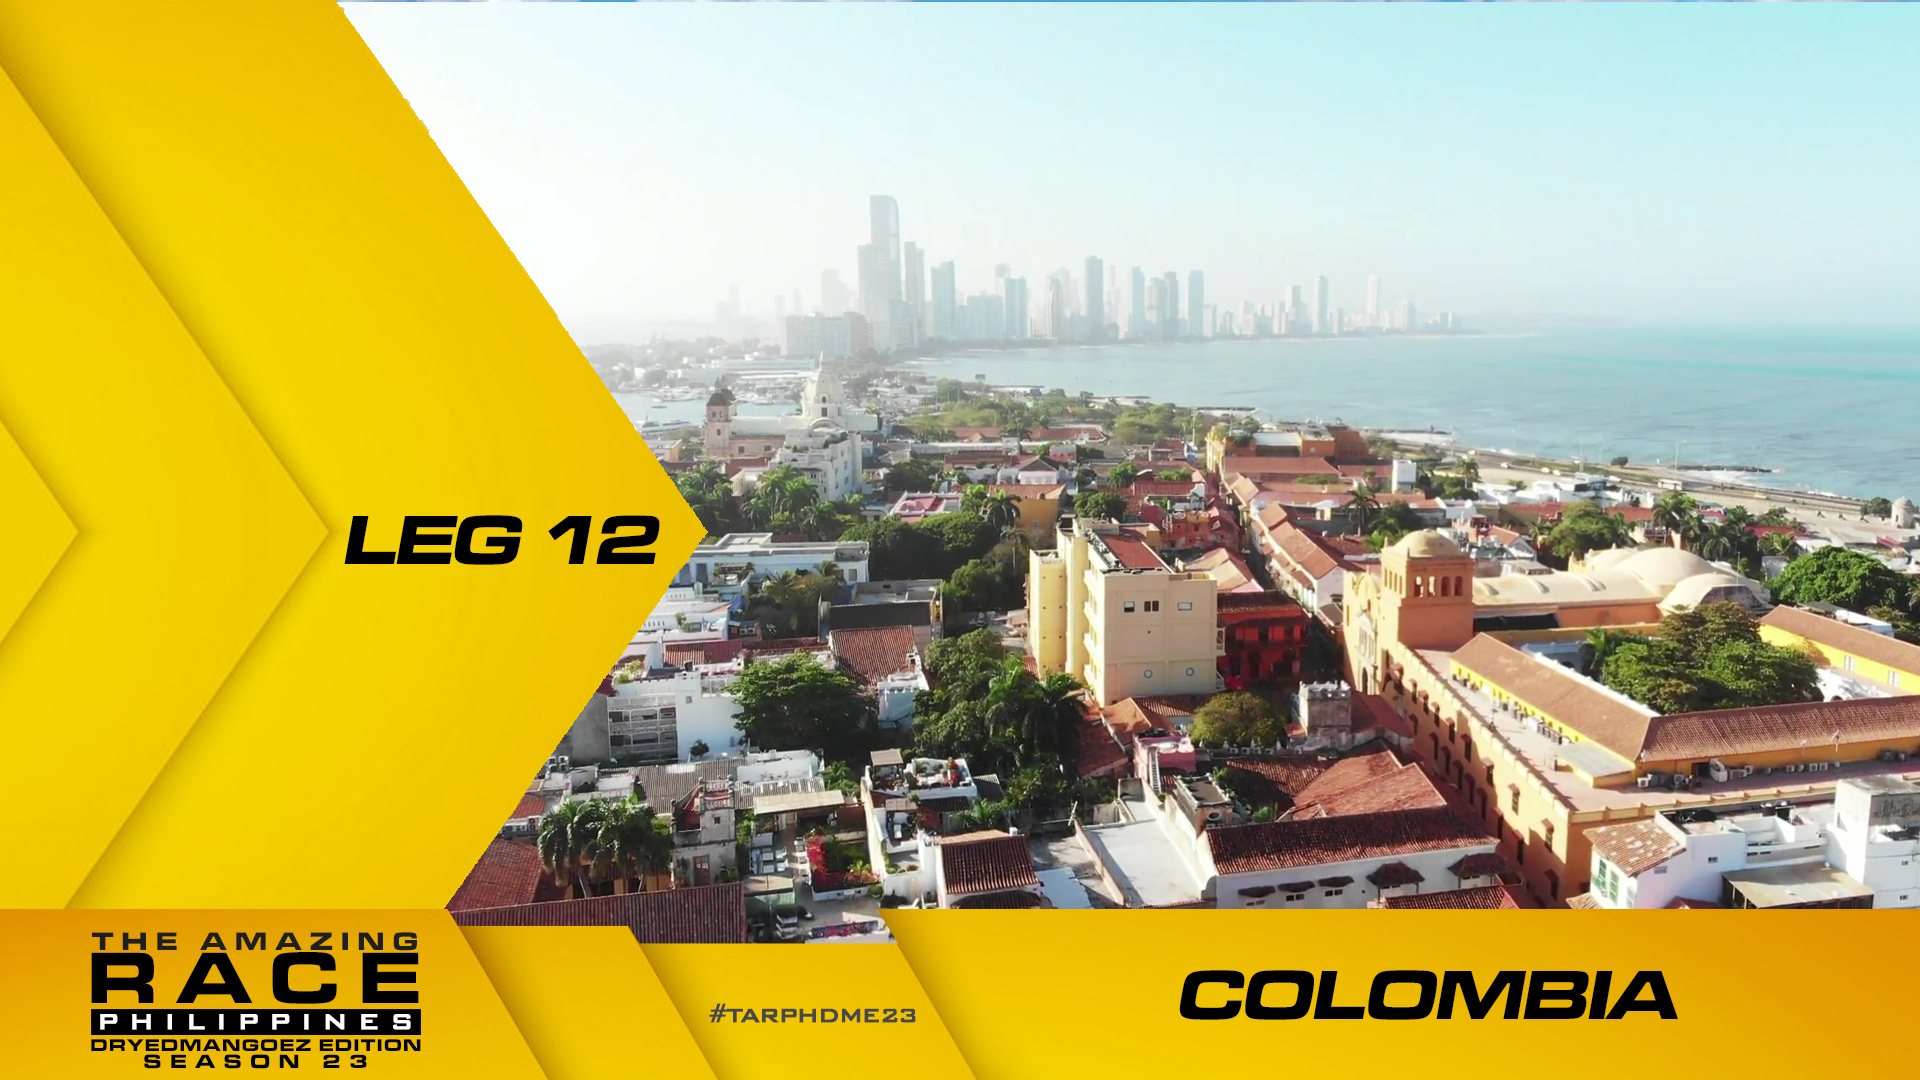 The Amazing Race Philippines: DryedMangoez Edition 23, Leg 12 – Colombia